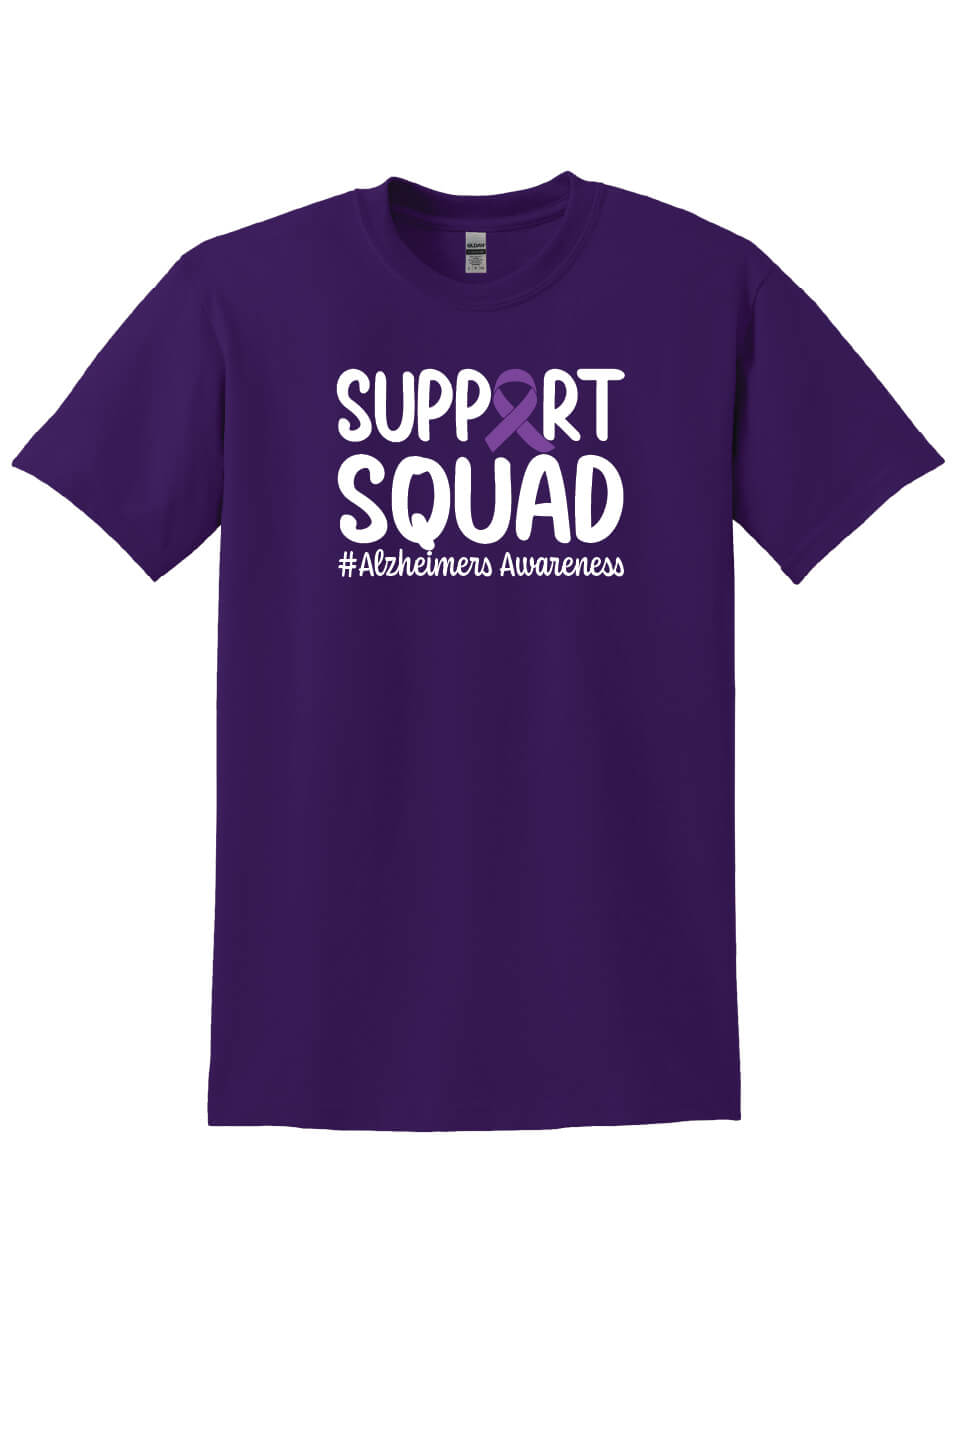 Support Squad Short Sleeve T-Shirt purple